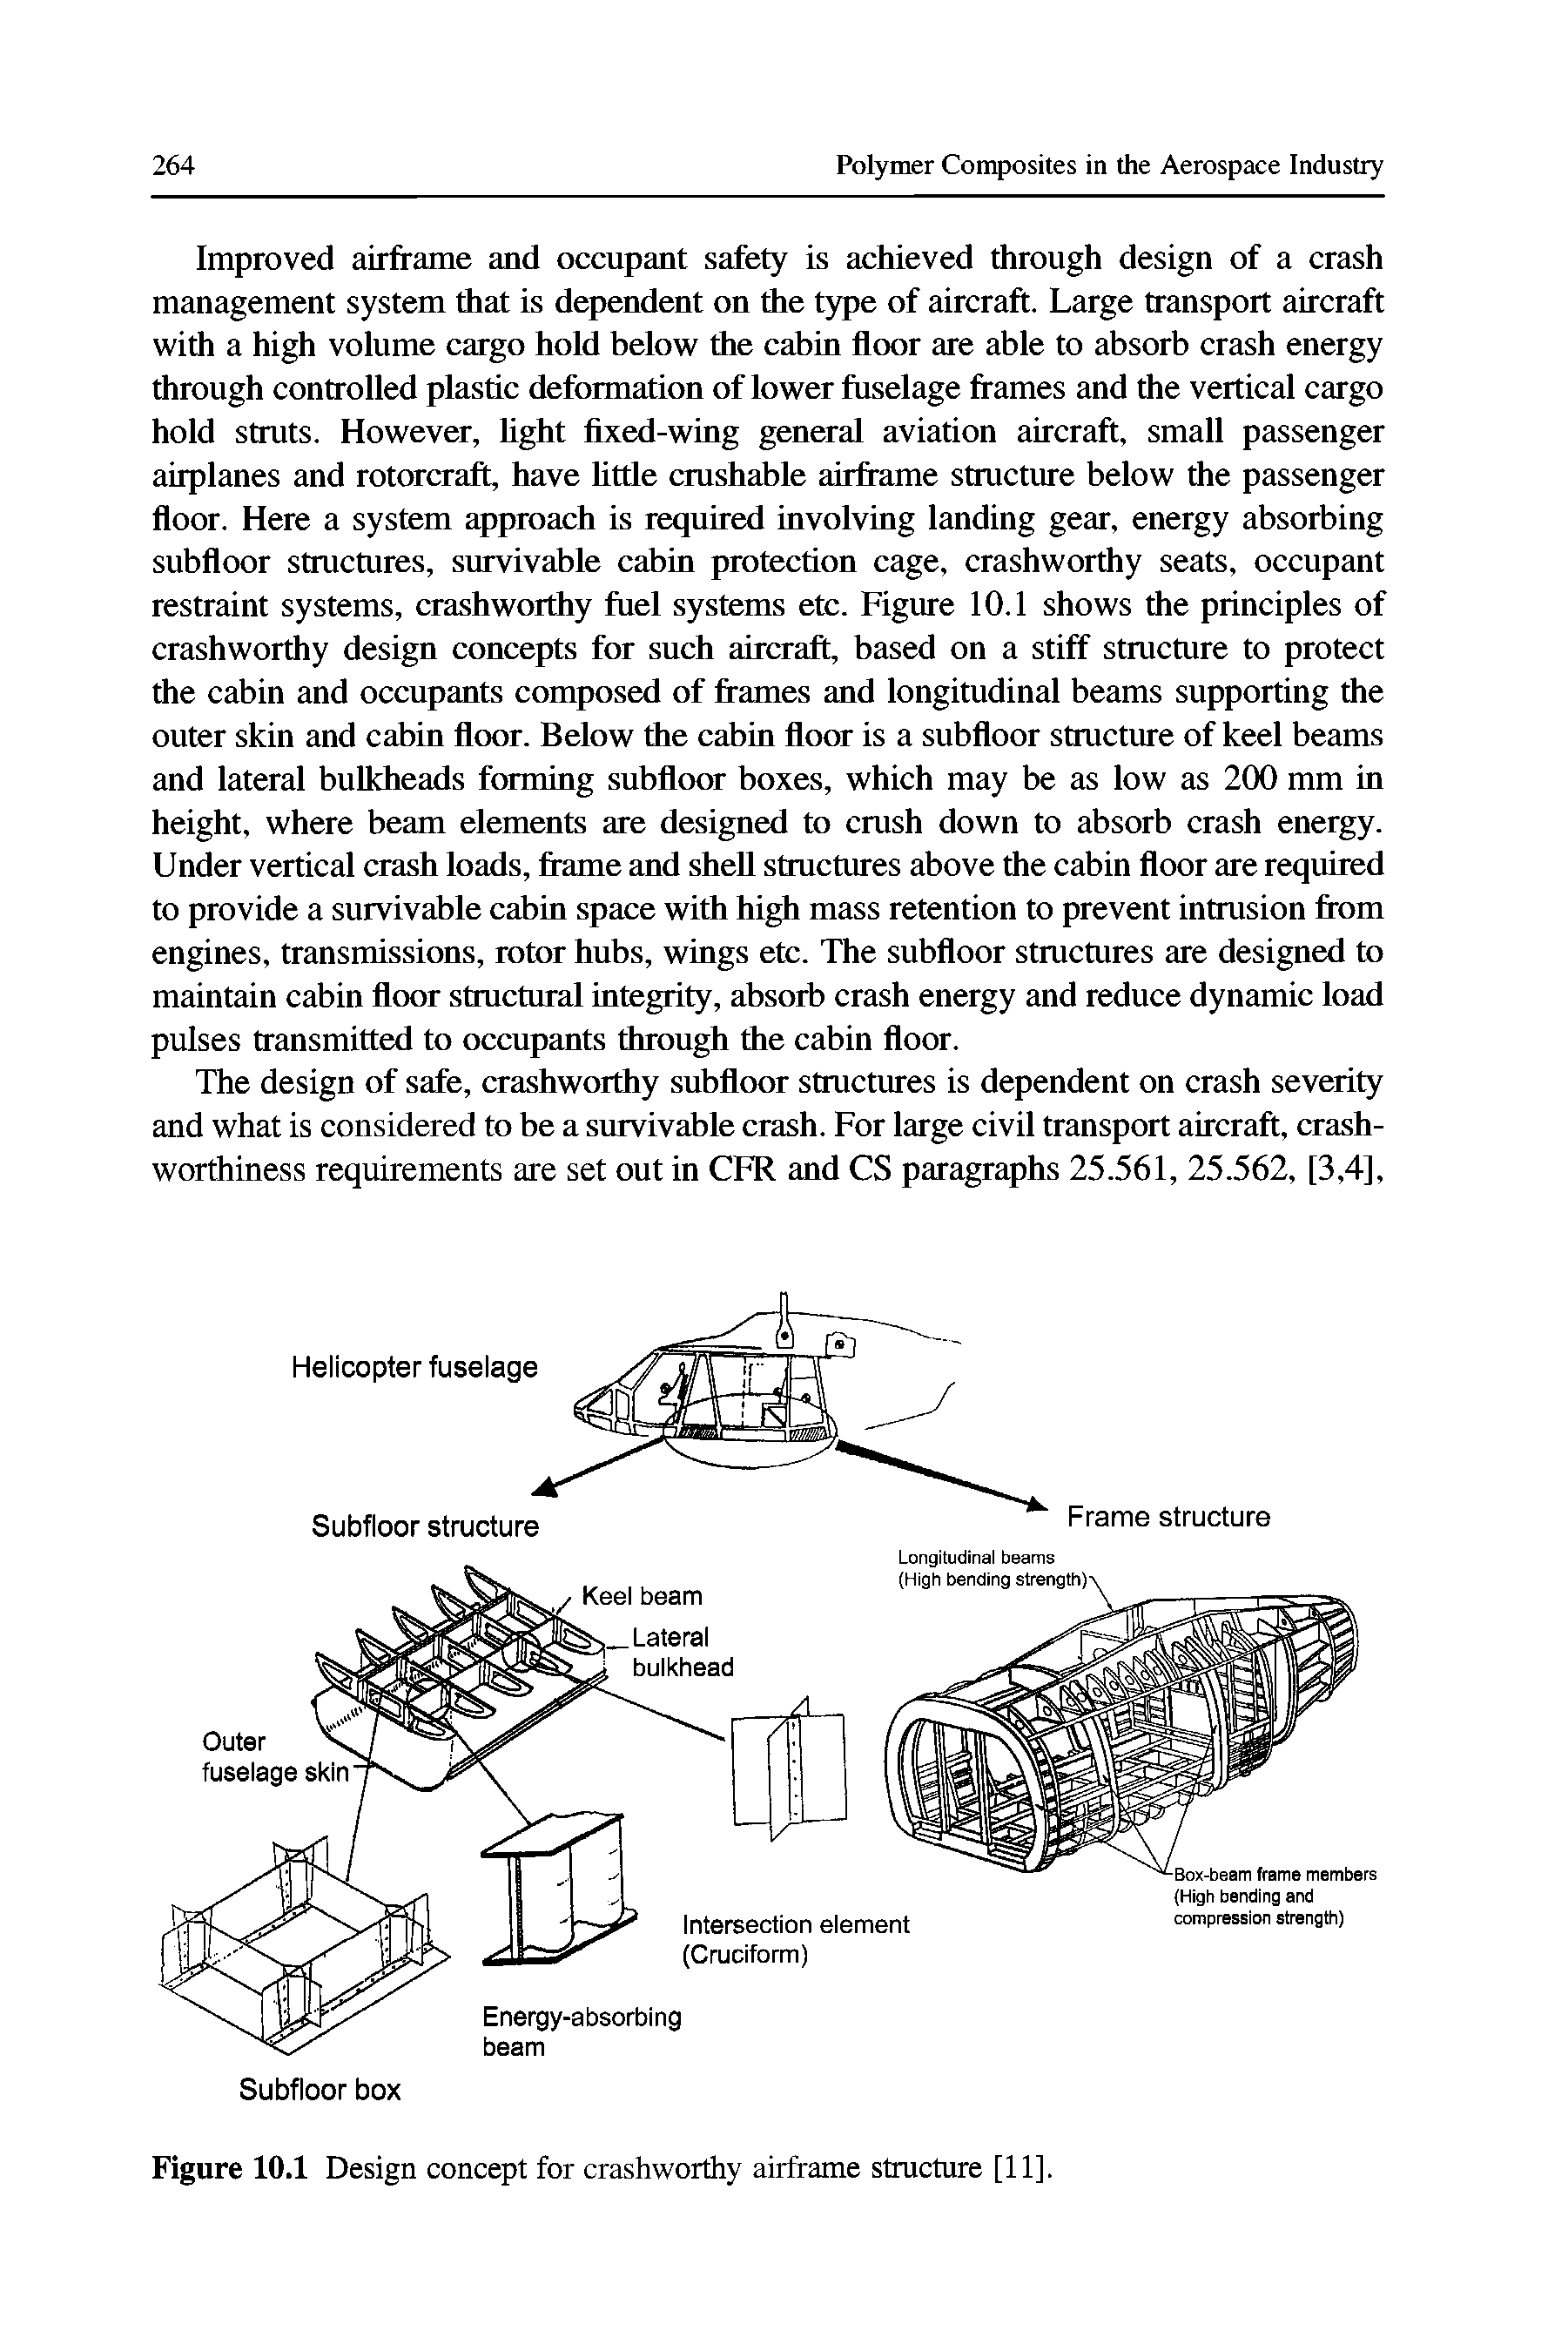 Figure 10.1 Design concept for crashworthy airframe structure [11].